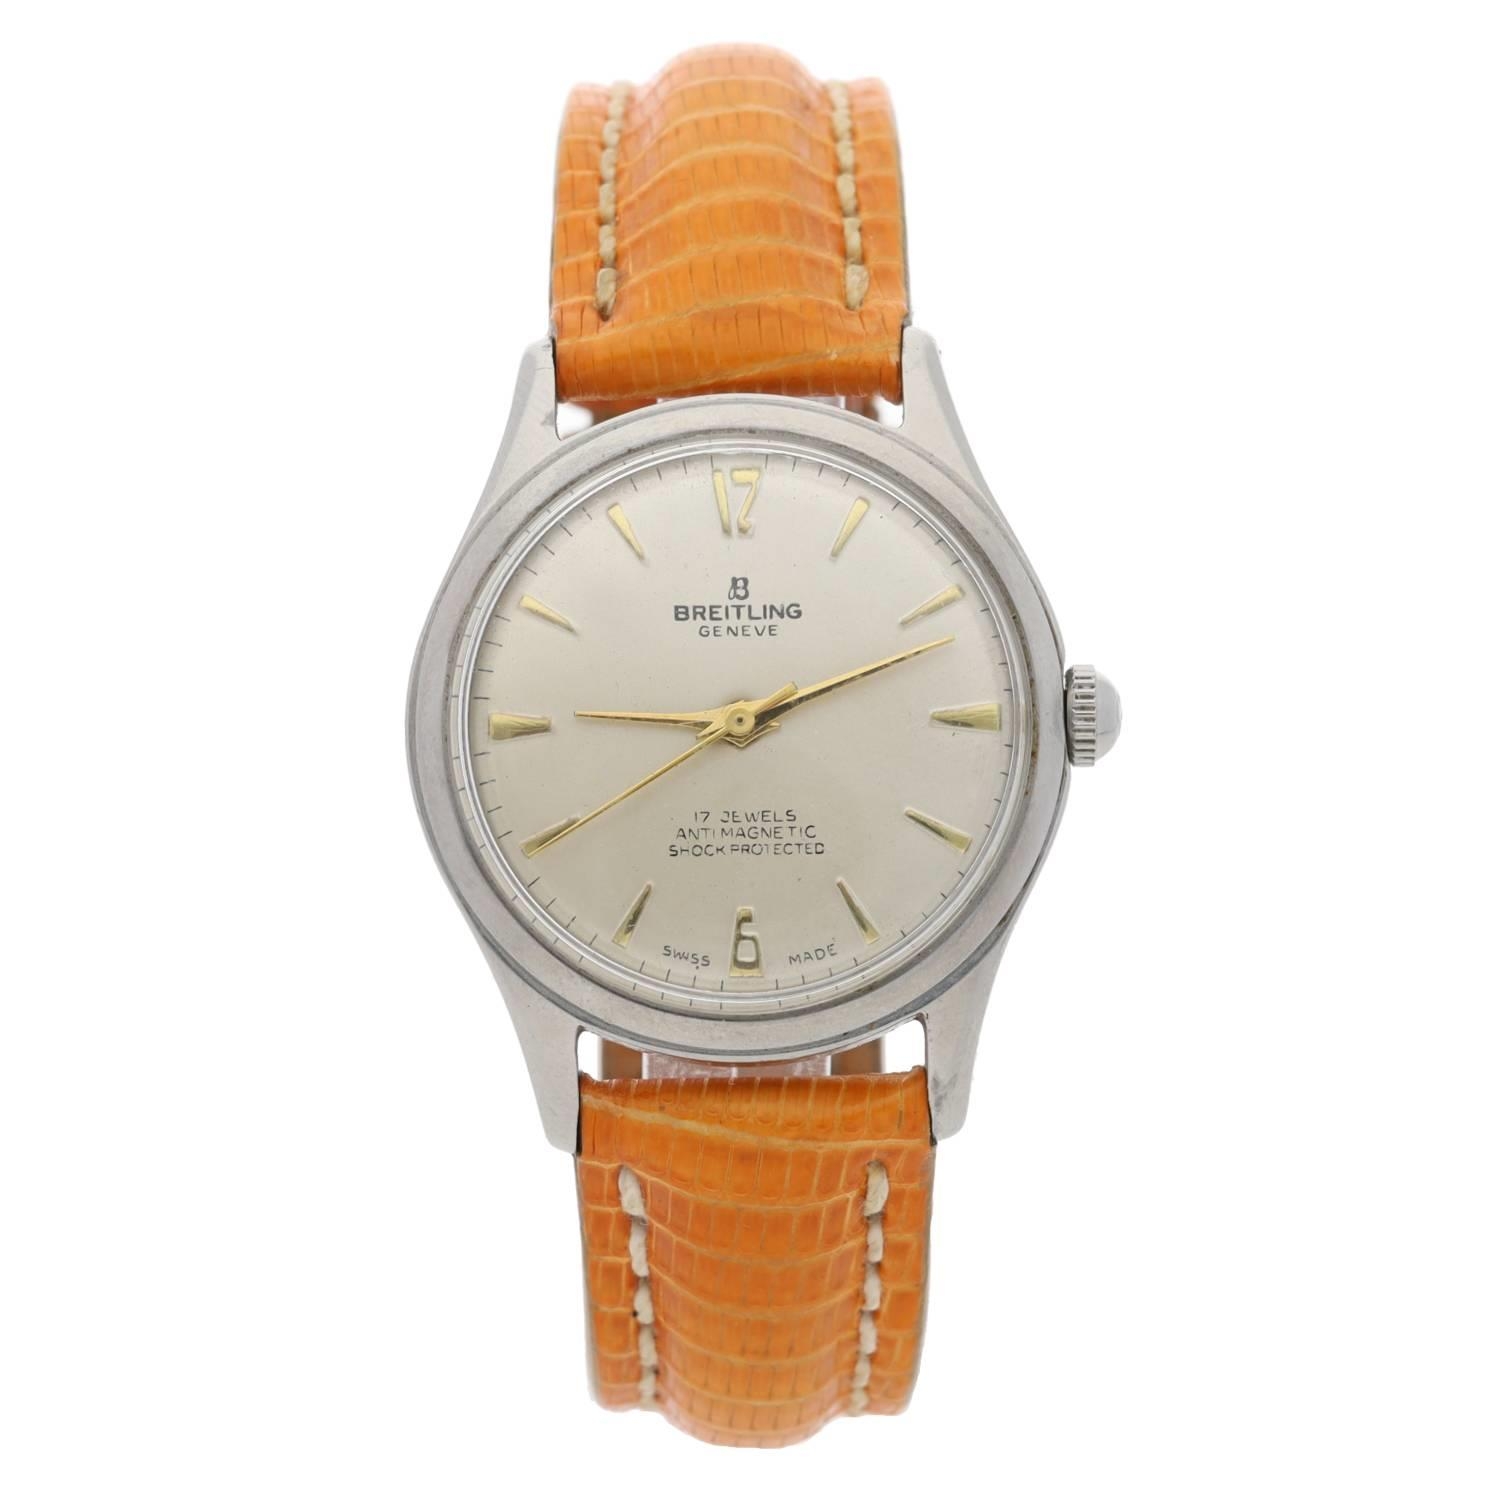 Breitling Geneve stainless steel gentleman's wristwatch, reference no. 2916, case no. 815xxx,